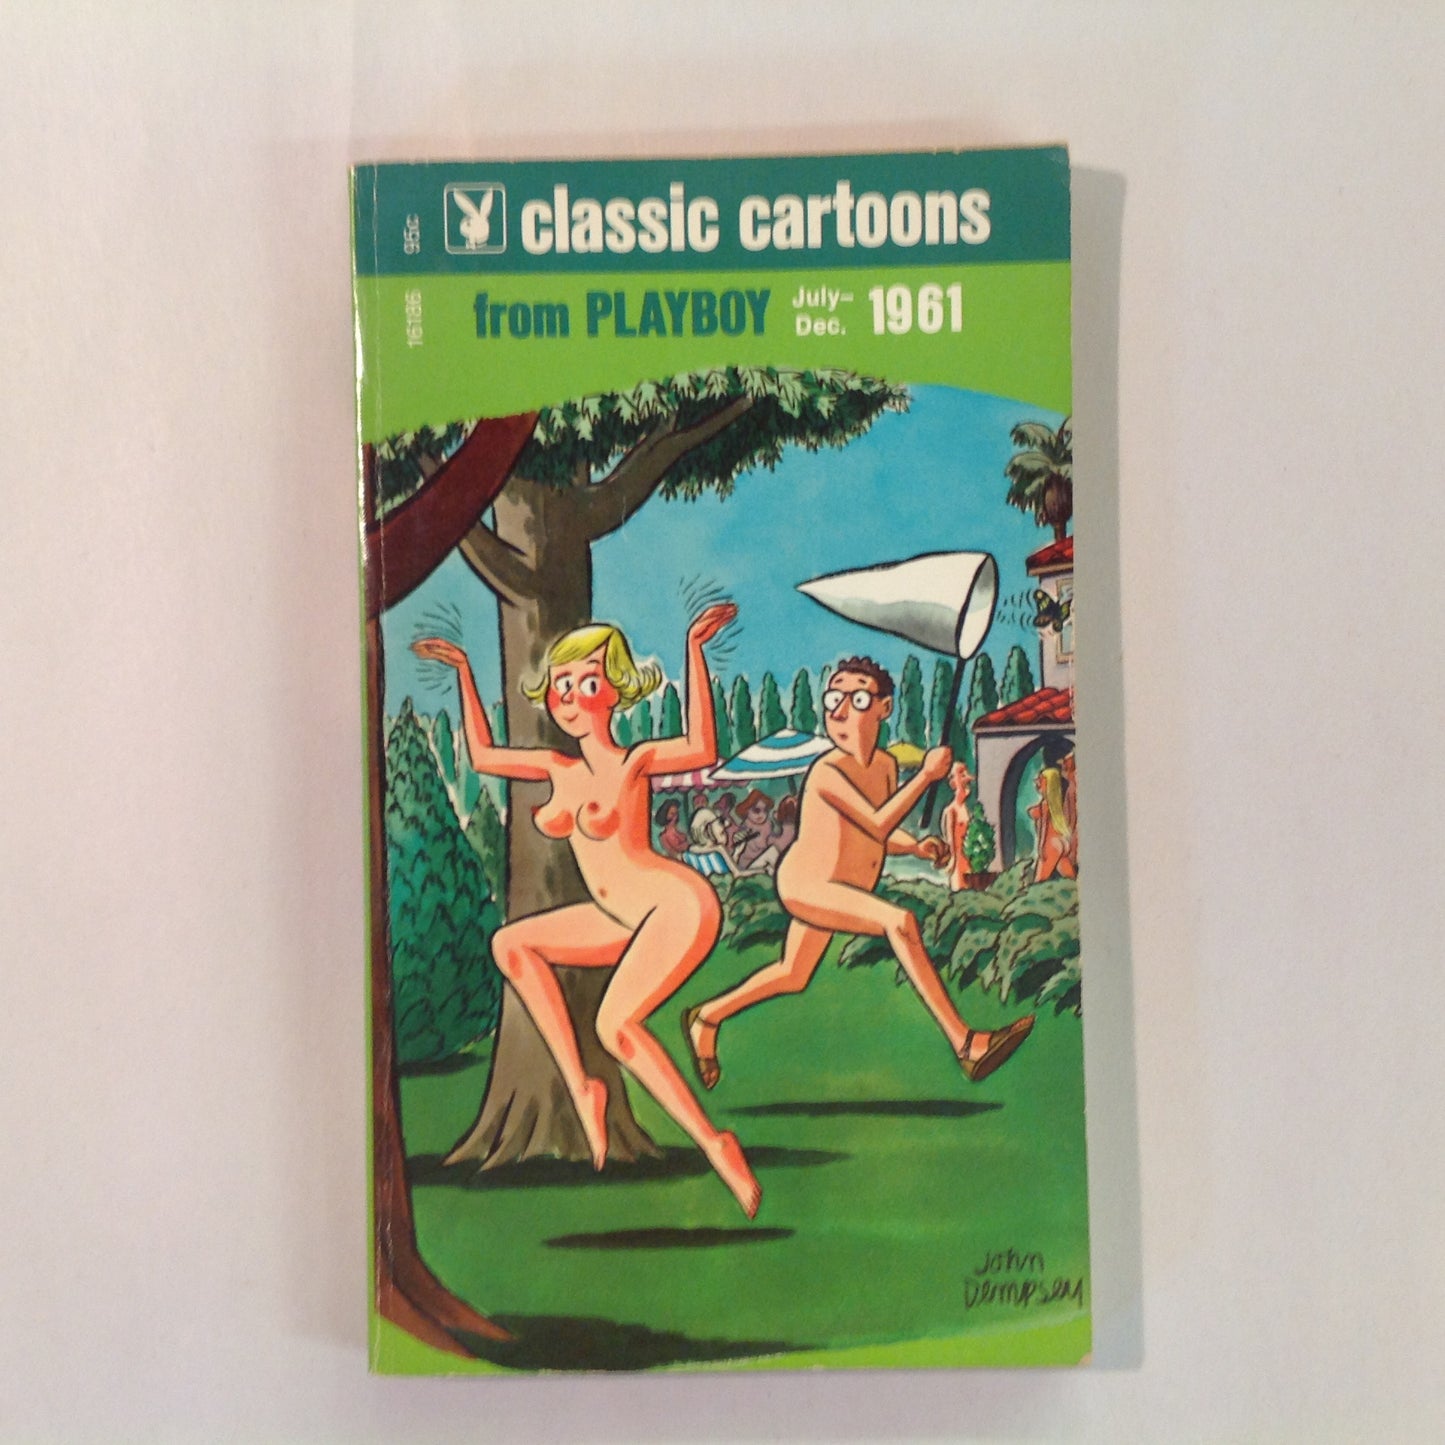 Vintage 1972 Playboy Press Paperback CLASSIC CARTOONS FROM PLAYBOY JULY-DEC 1961